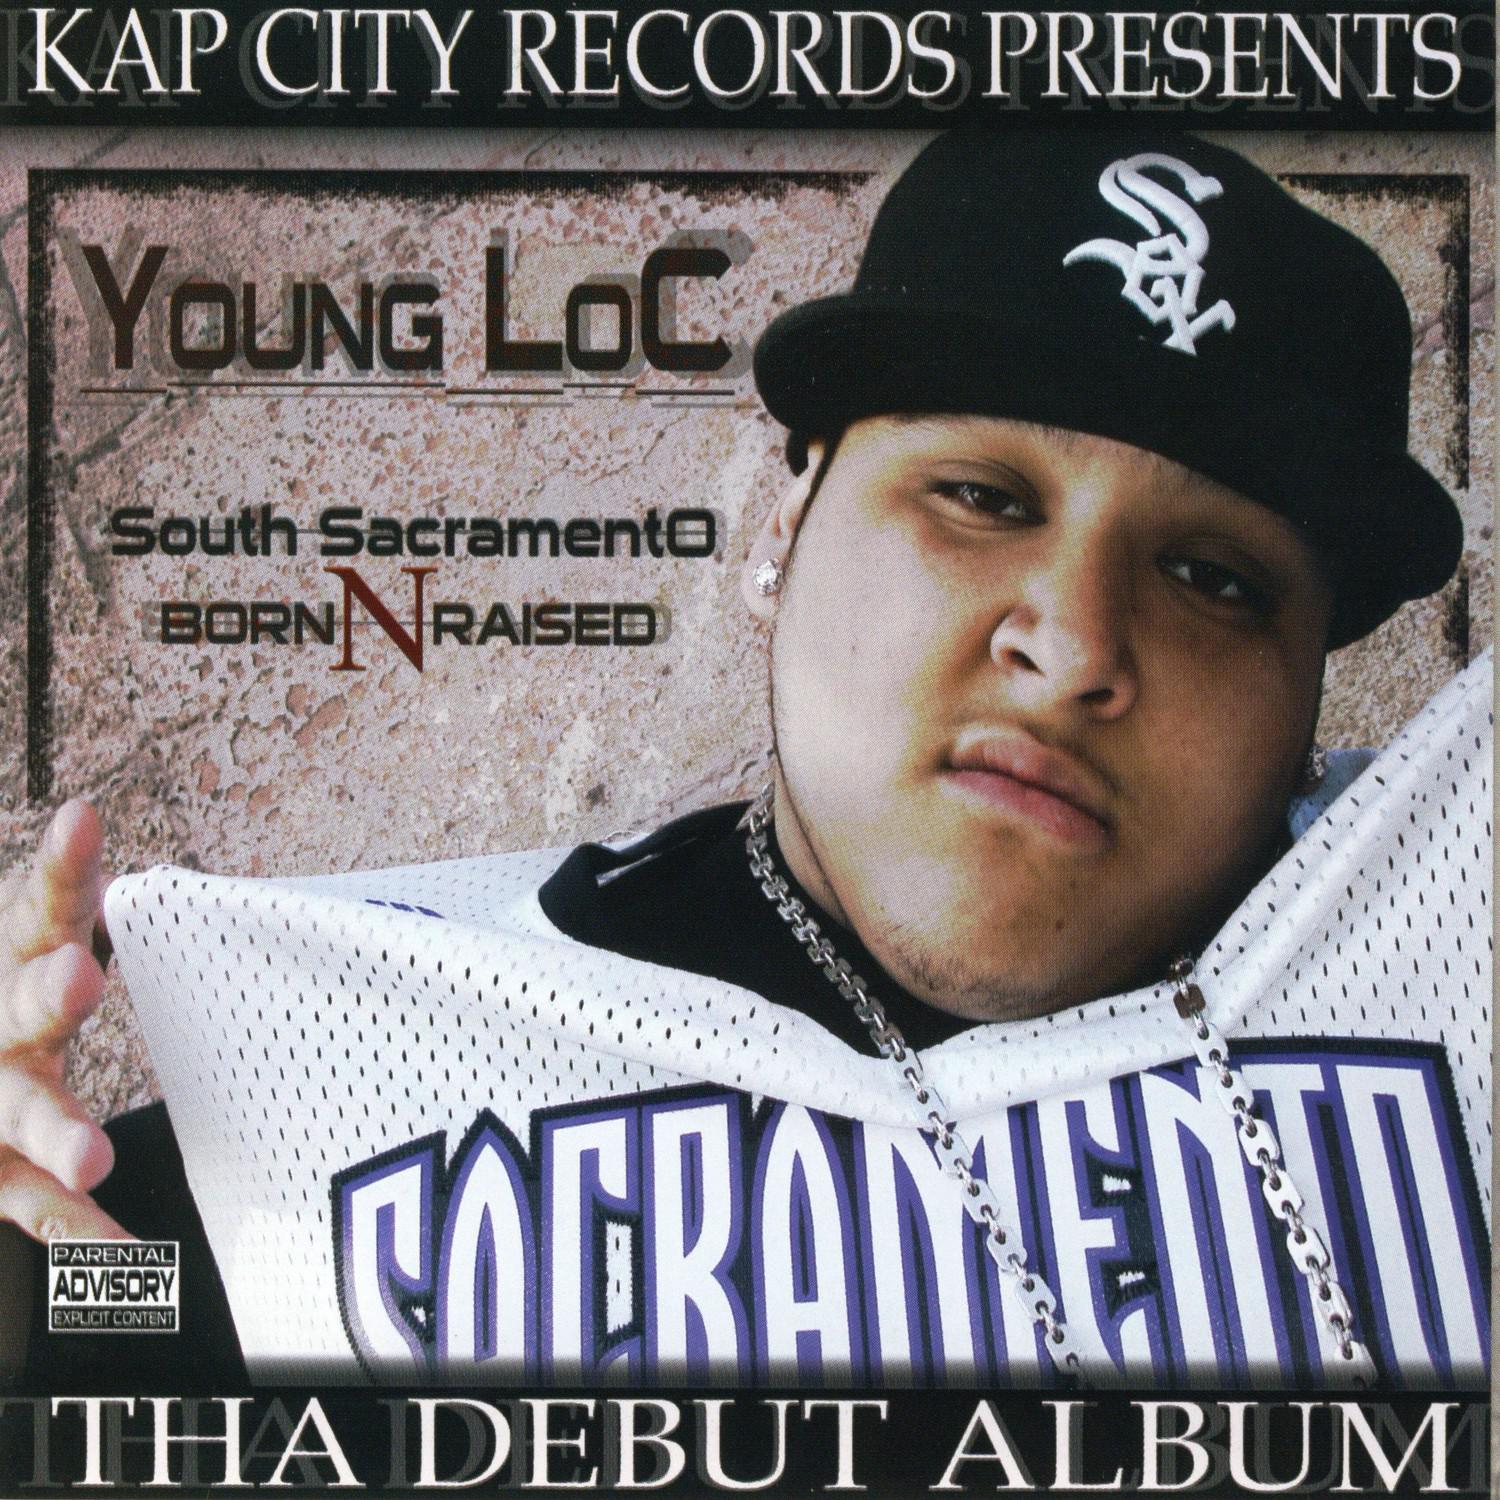 South Sacramento Born N Raised: Tha Debut Album